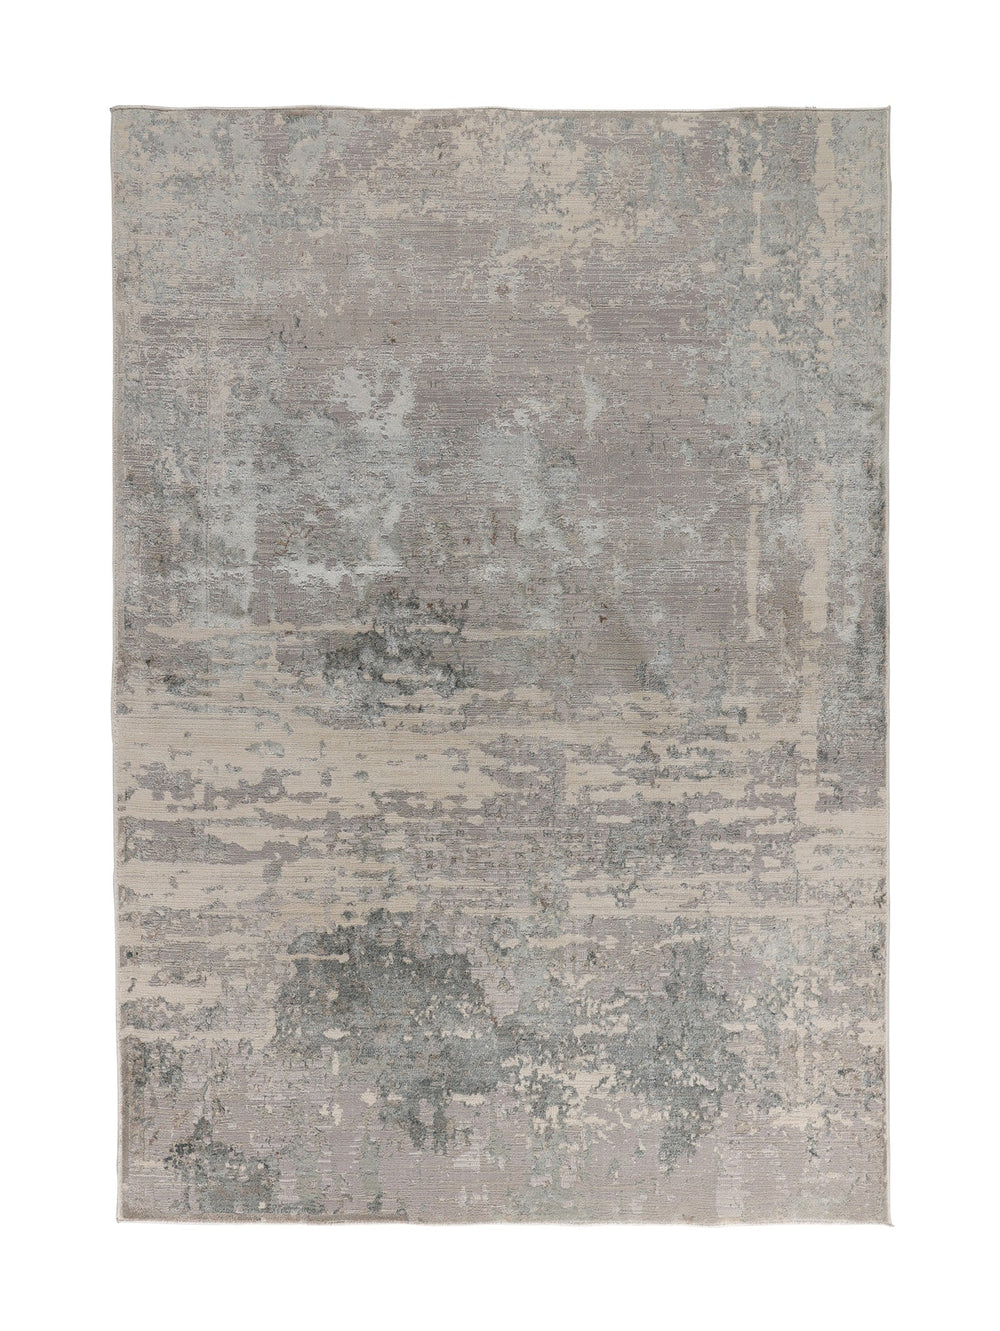 Phantom Rug in Fossil - Rugs- Hertex Haus Online - Abstract